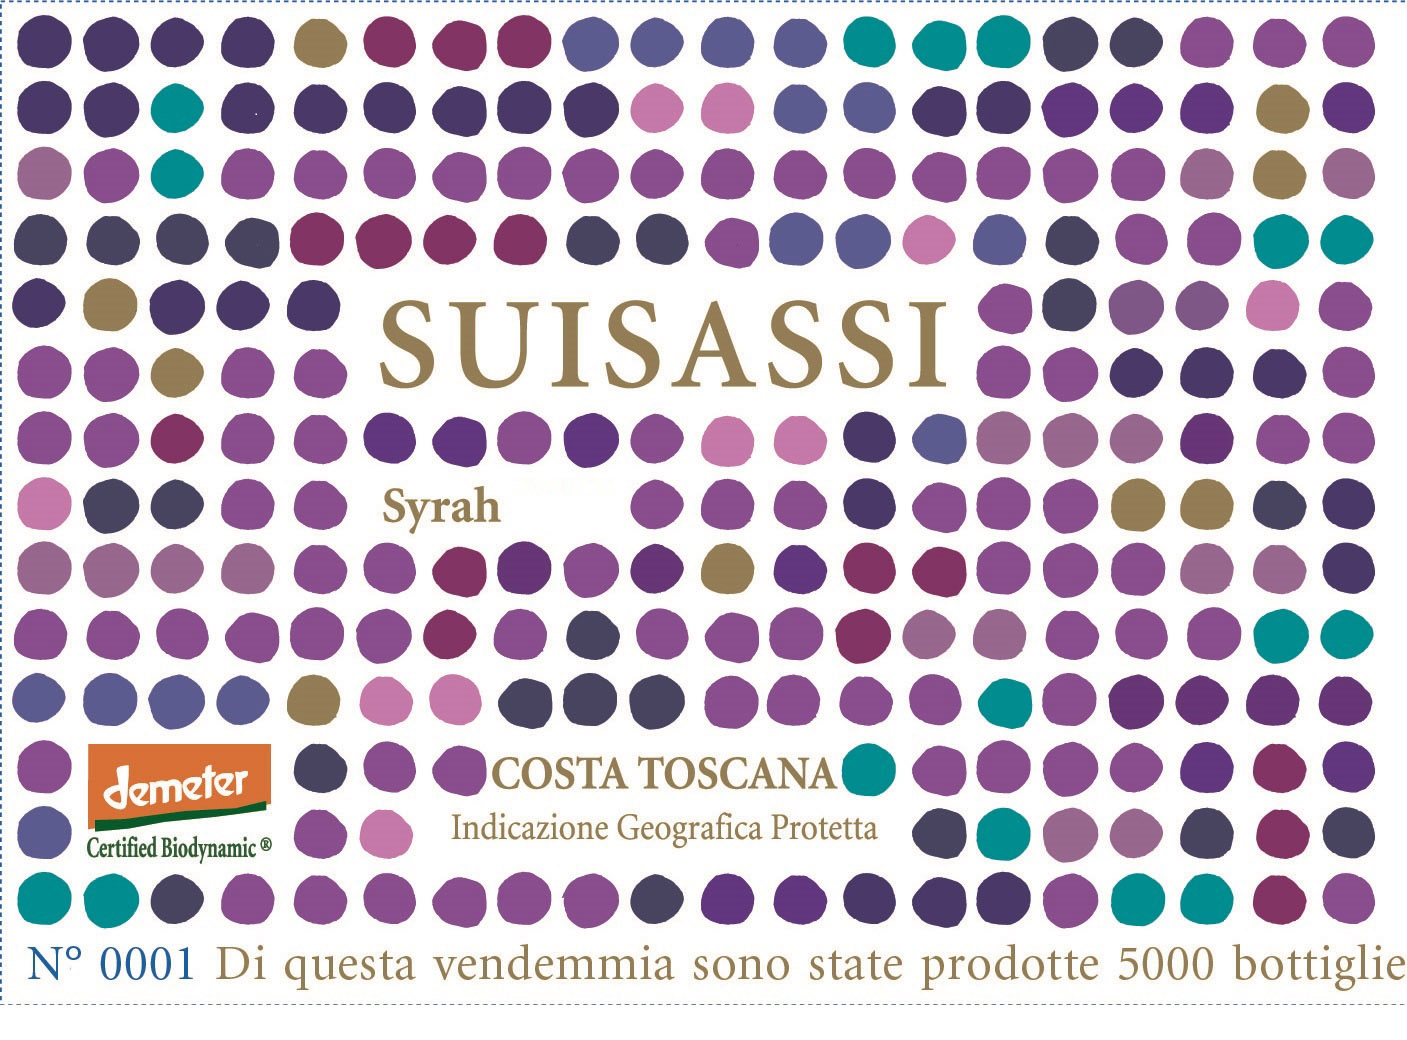 Duemani Suisassi - Syrah label